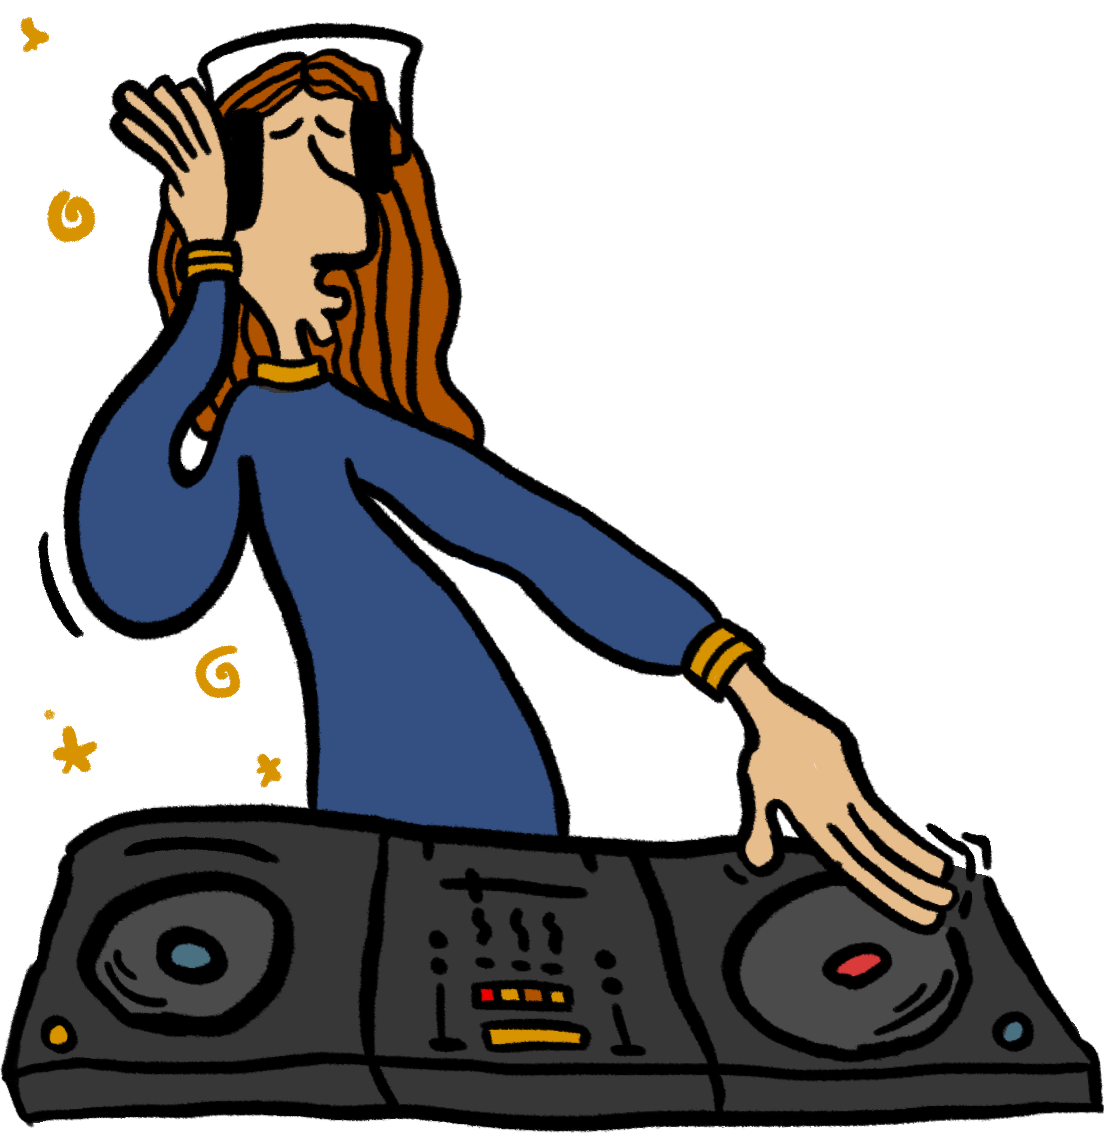 DJ illustration by Ned McKenna